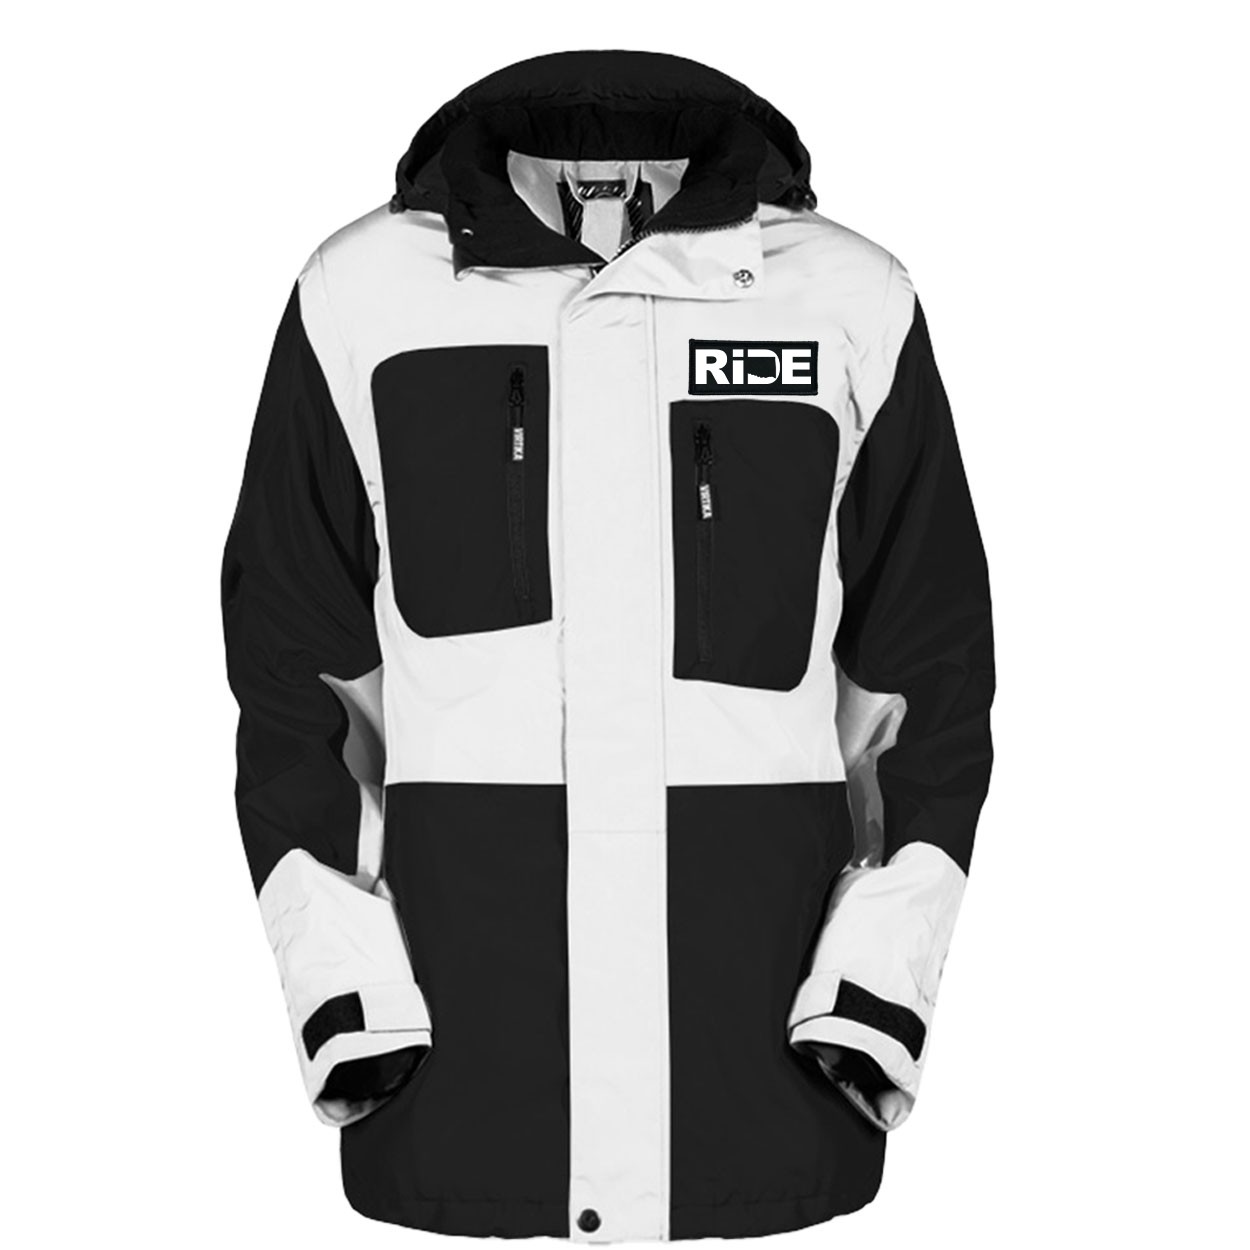 Ride Oklahoma Pro Waterproof Breathable Winter Virtika Jacket Black/White (White Logo)